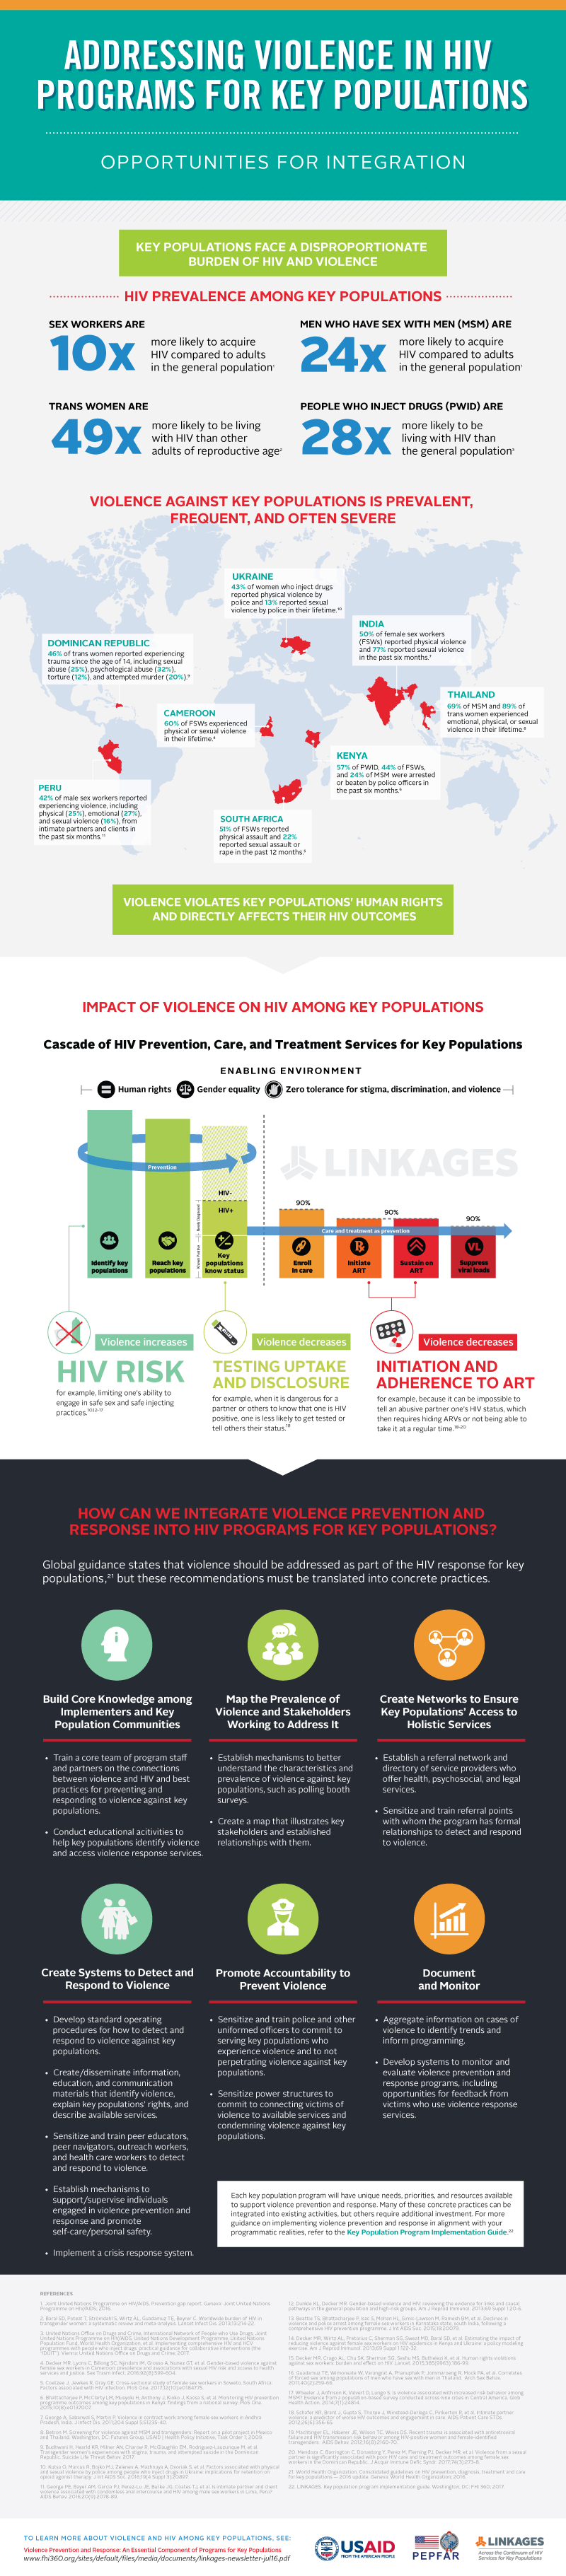 GPV-HIV-infographic-FINAL